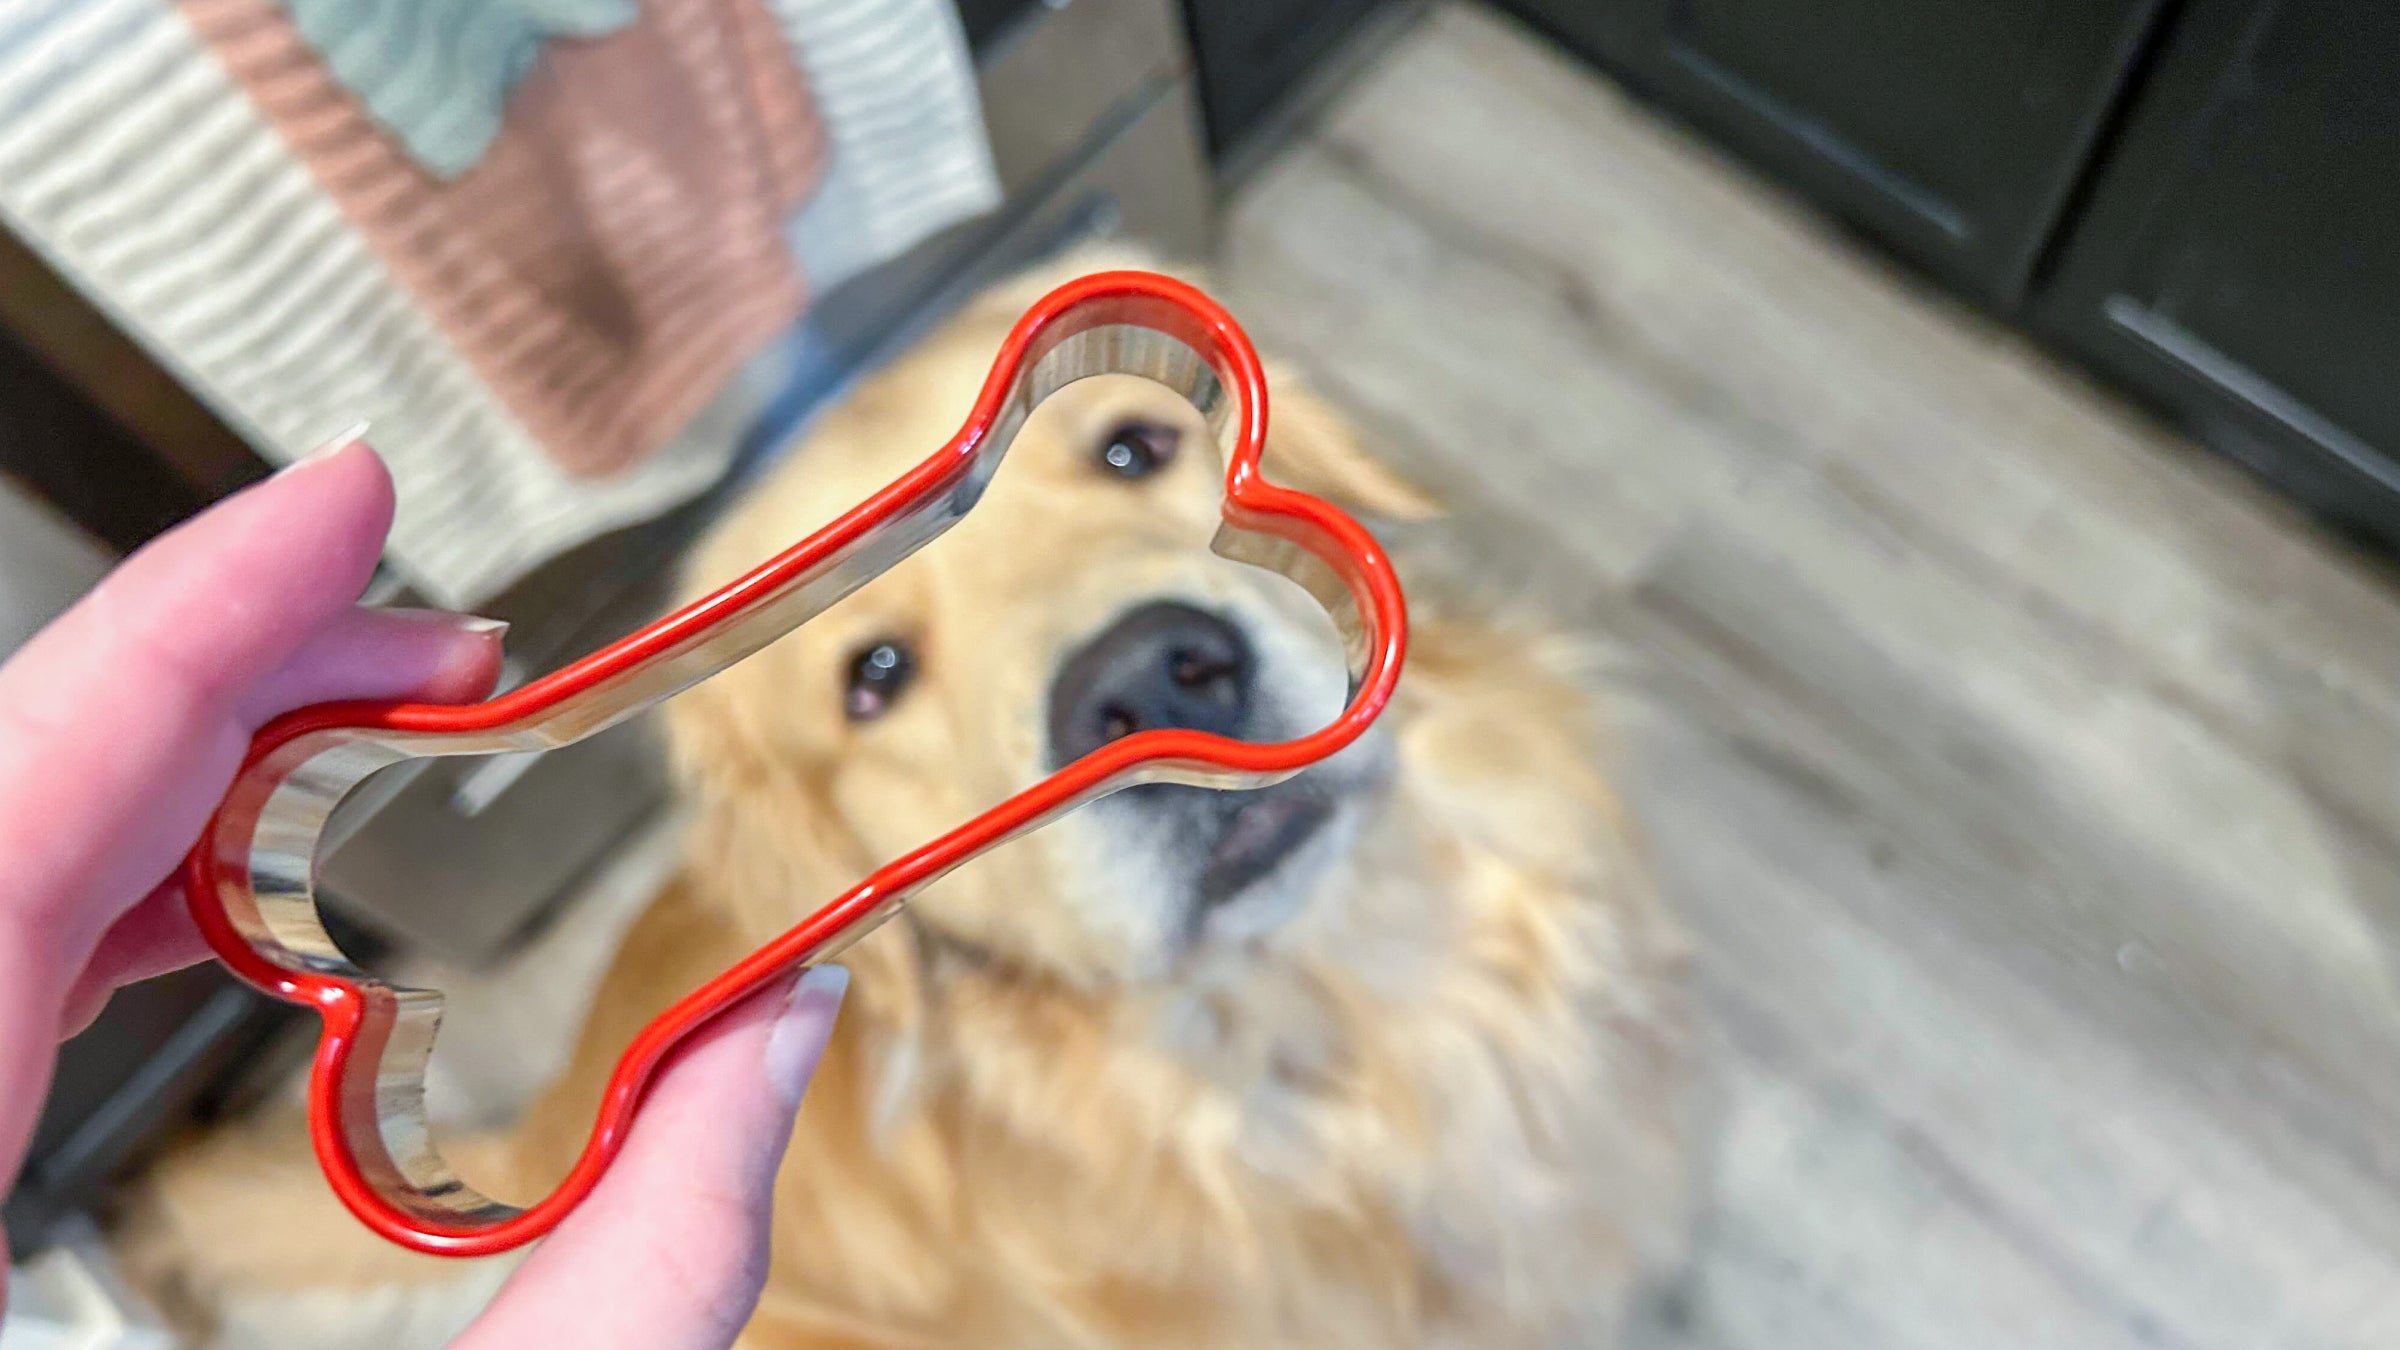 A tan golden retriever dog peeks through a red dog bone shaped cookie cutter